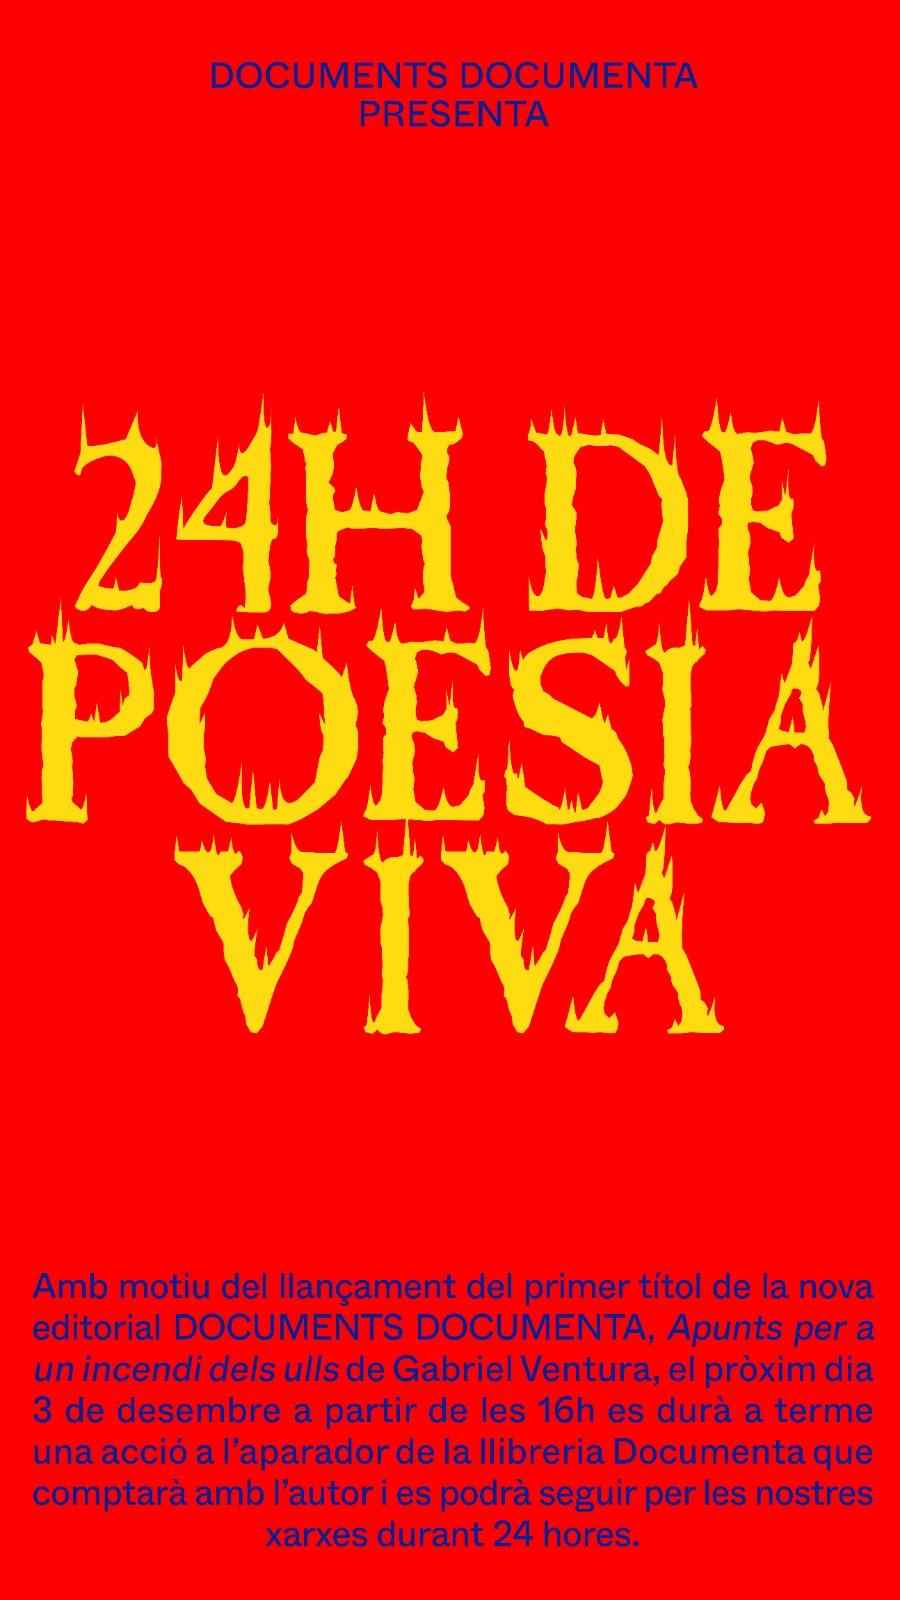 Documents Documenta presenta: 24H DE POESIA VIVA - 